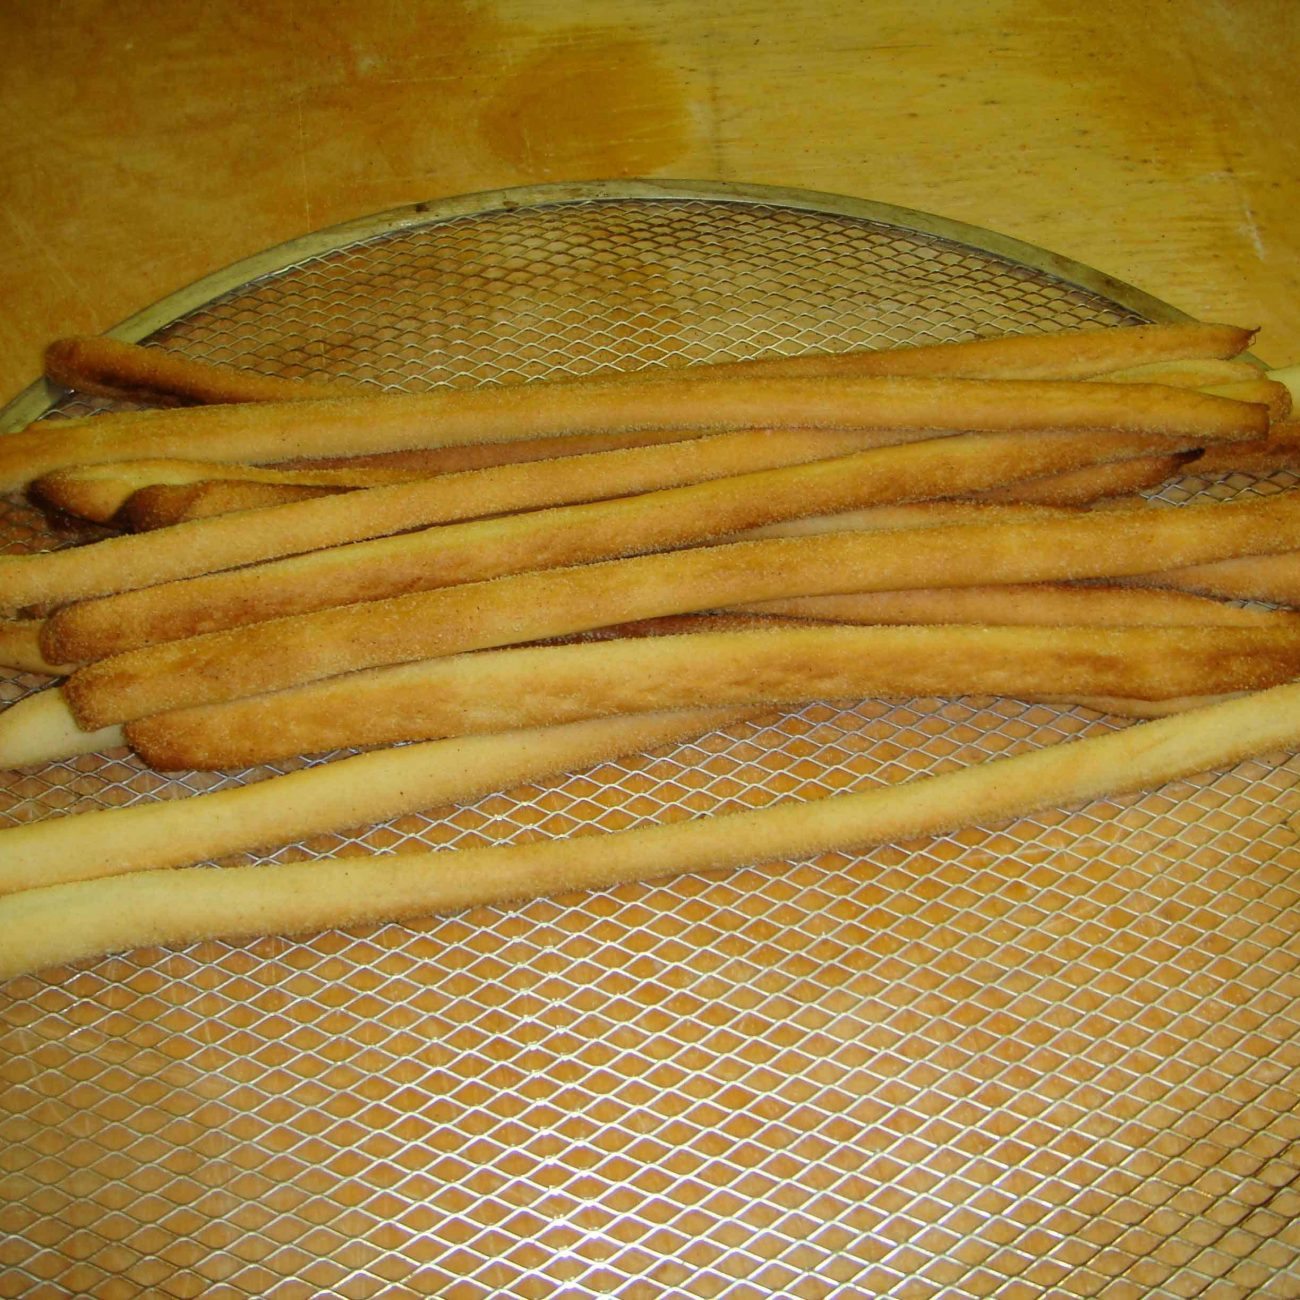 Breadsticks recipe